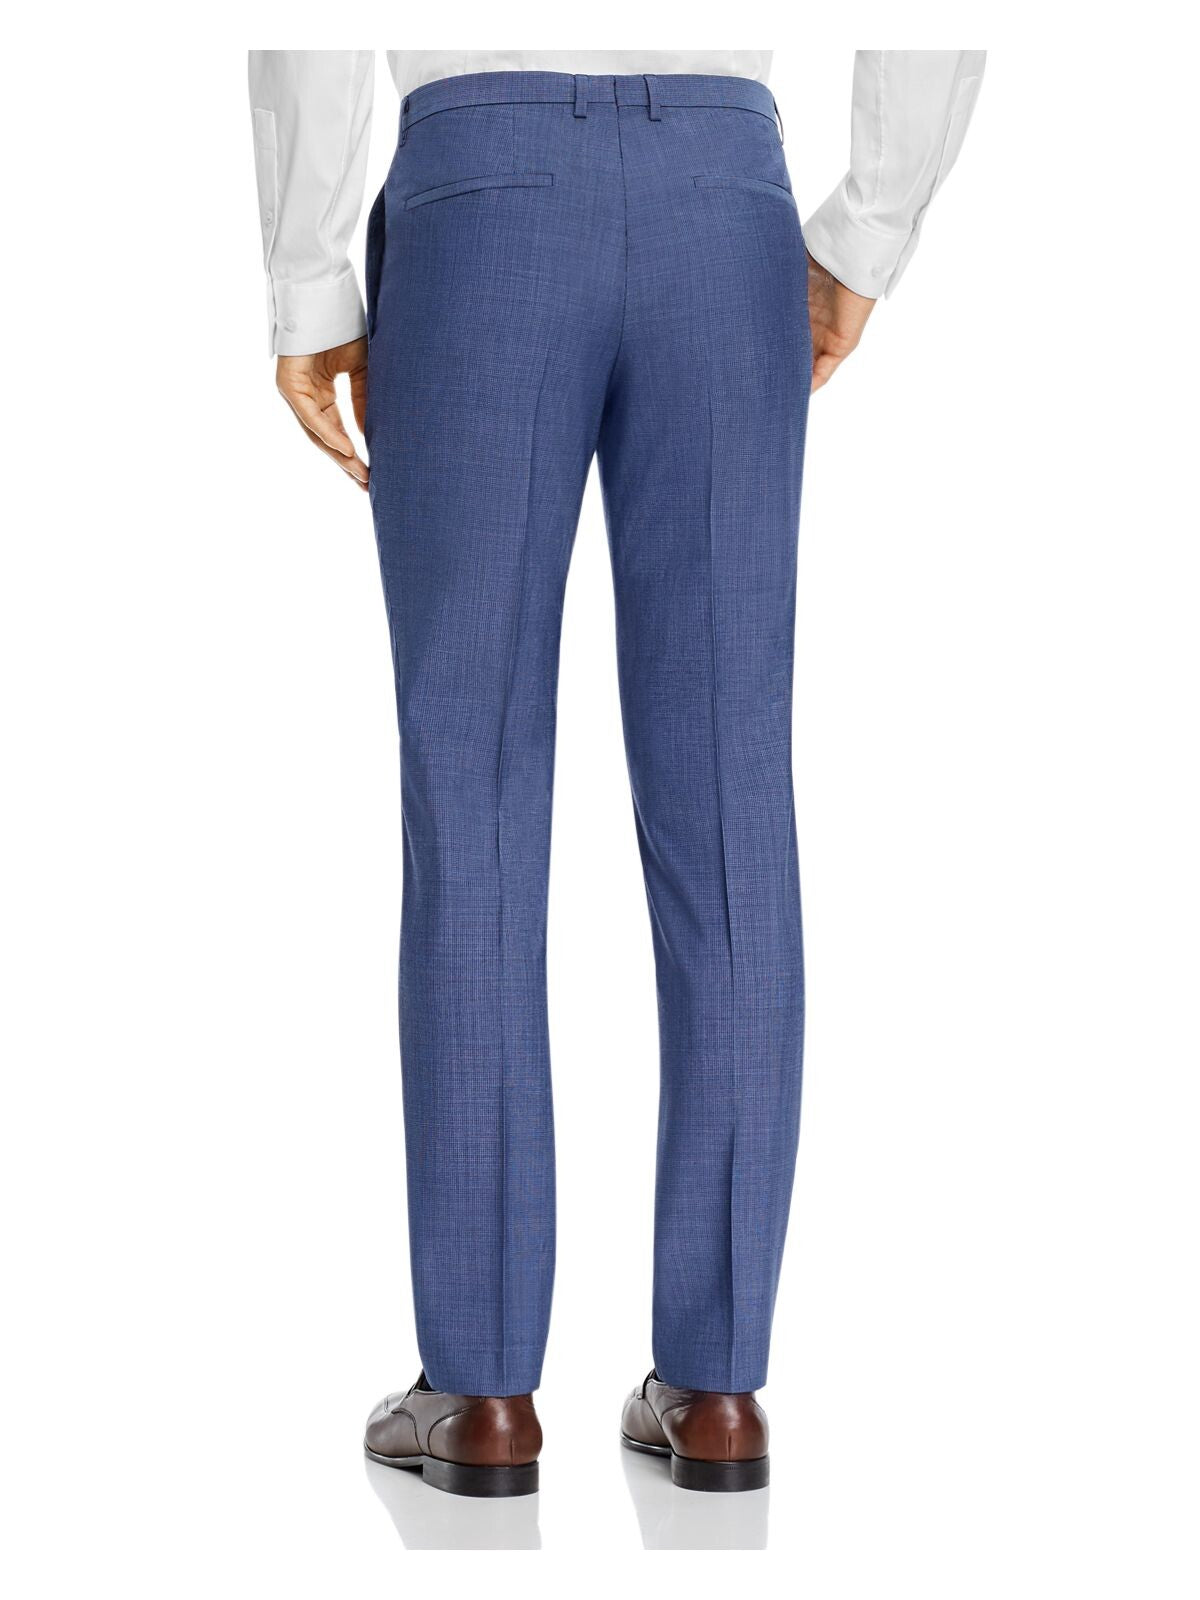 HUGO BOSS Mens Hets Blue Tapered, Plaid Extra Slim Fit Wool Blend Pants 32R